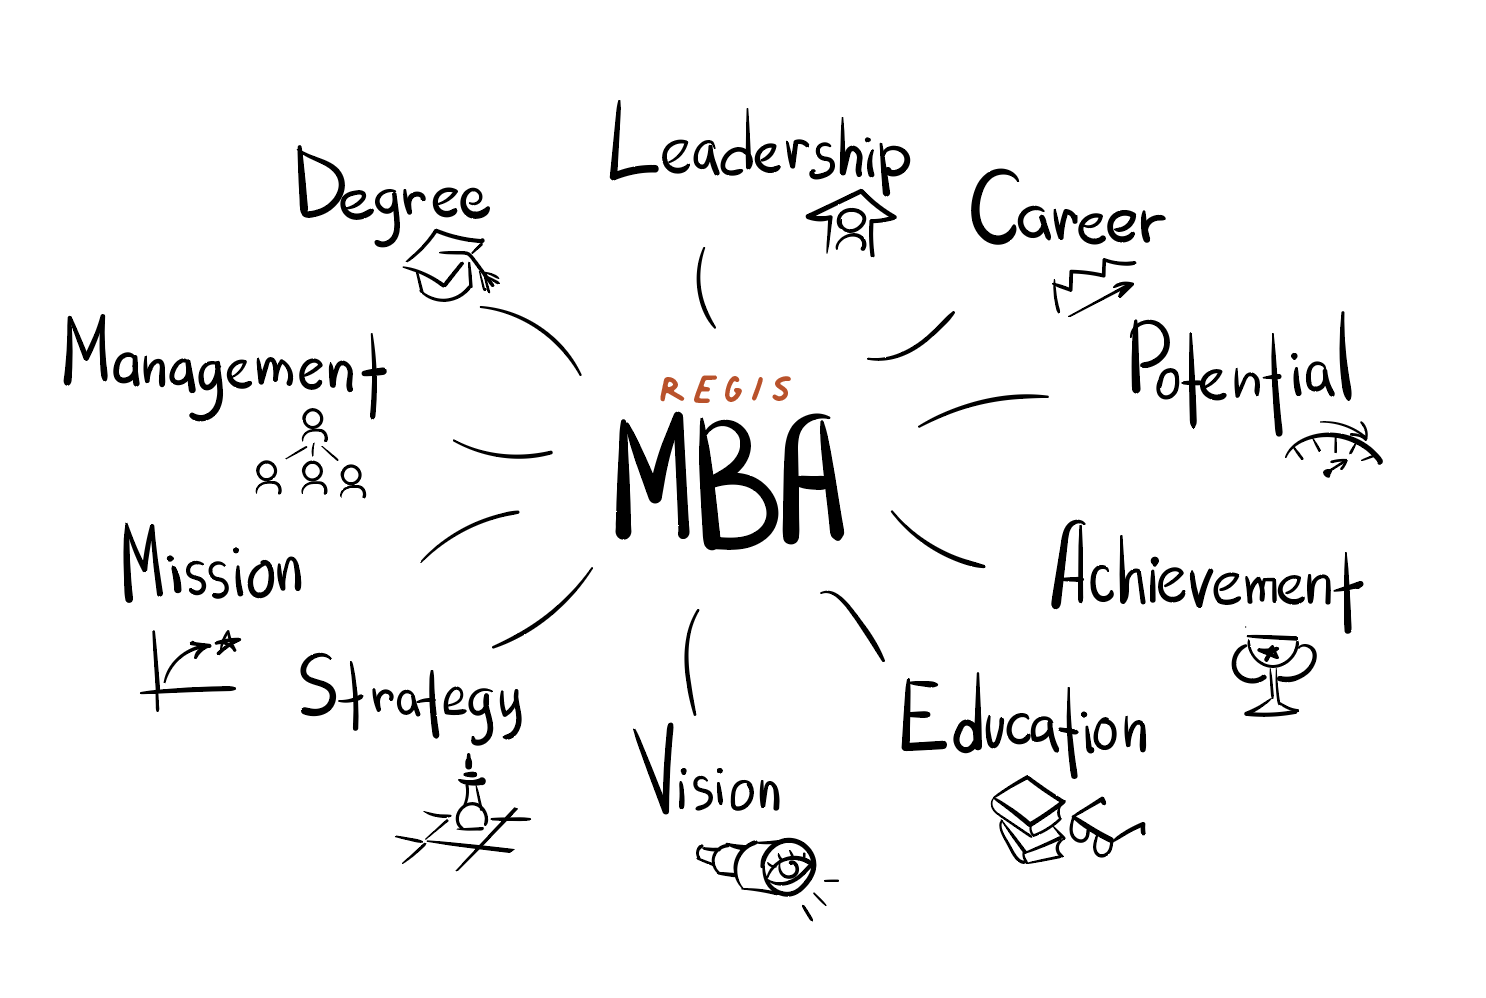 Regis MBA helps graduate students and alumni bridge science and business